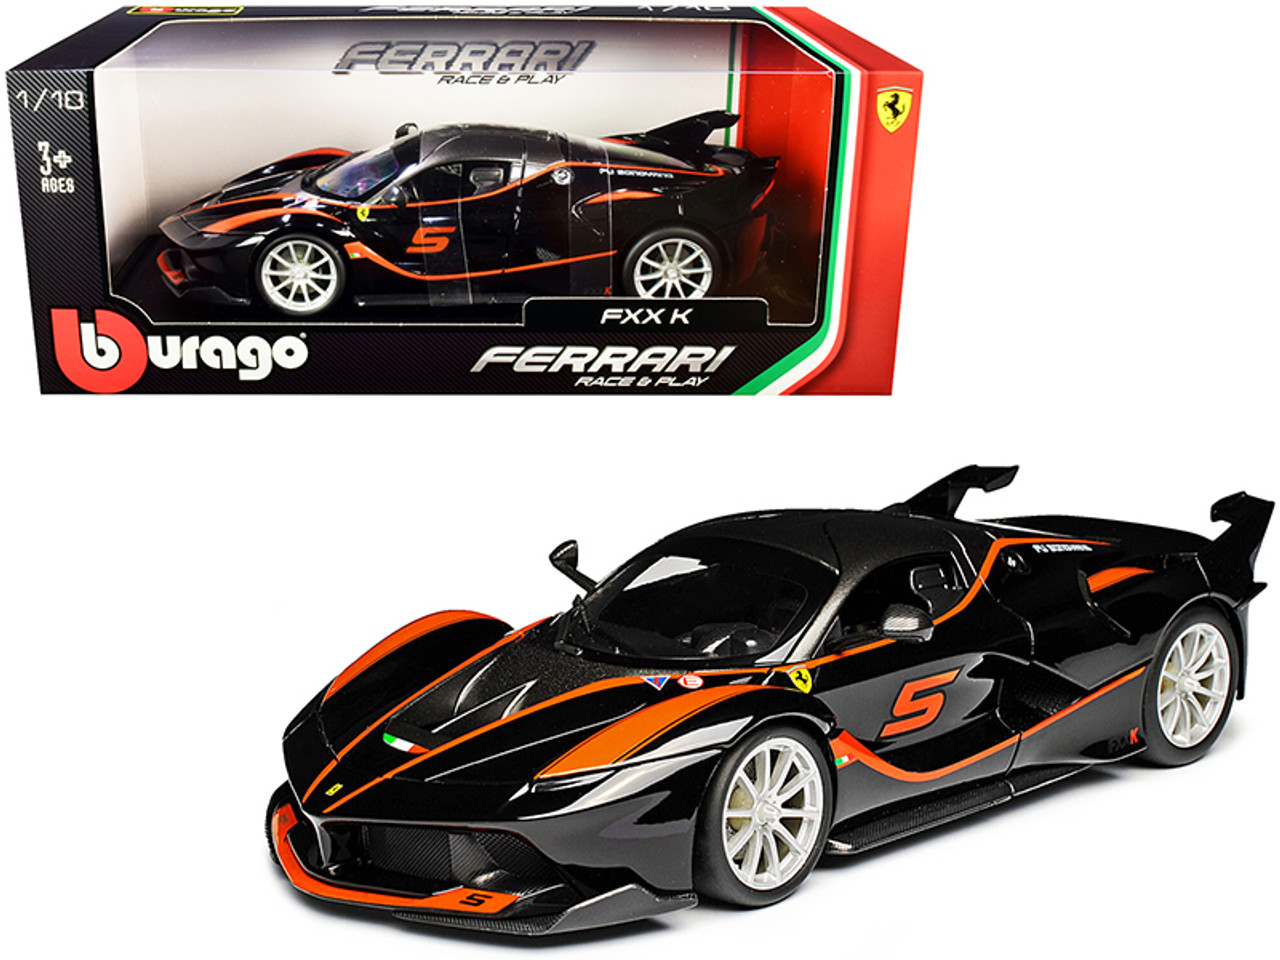 1/18 BBurago Ferrari FXX-K FXXK #5 Fu Songyang (Black with Gray Top and Orange Stripes) Diecast Car Model